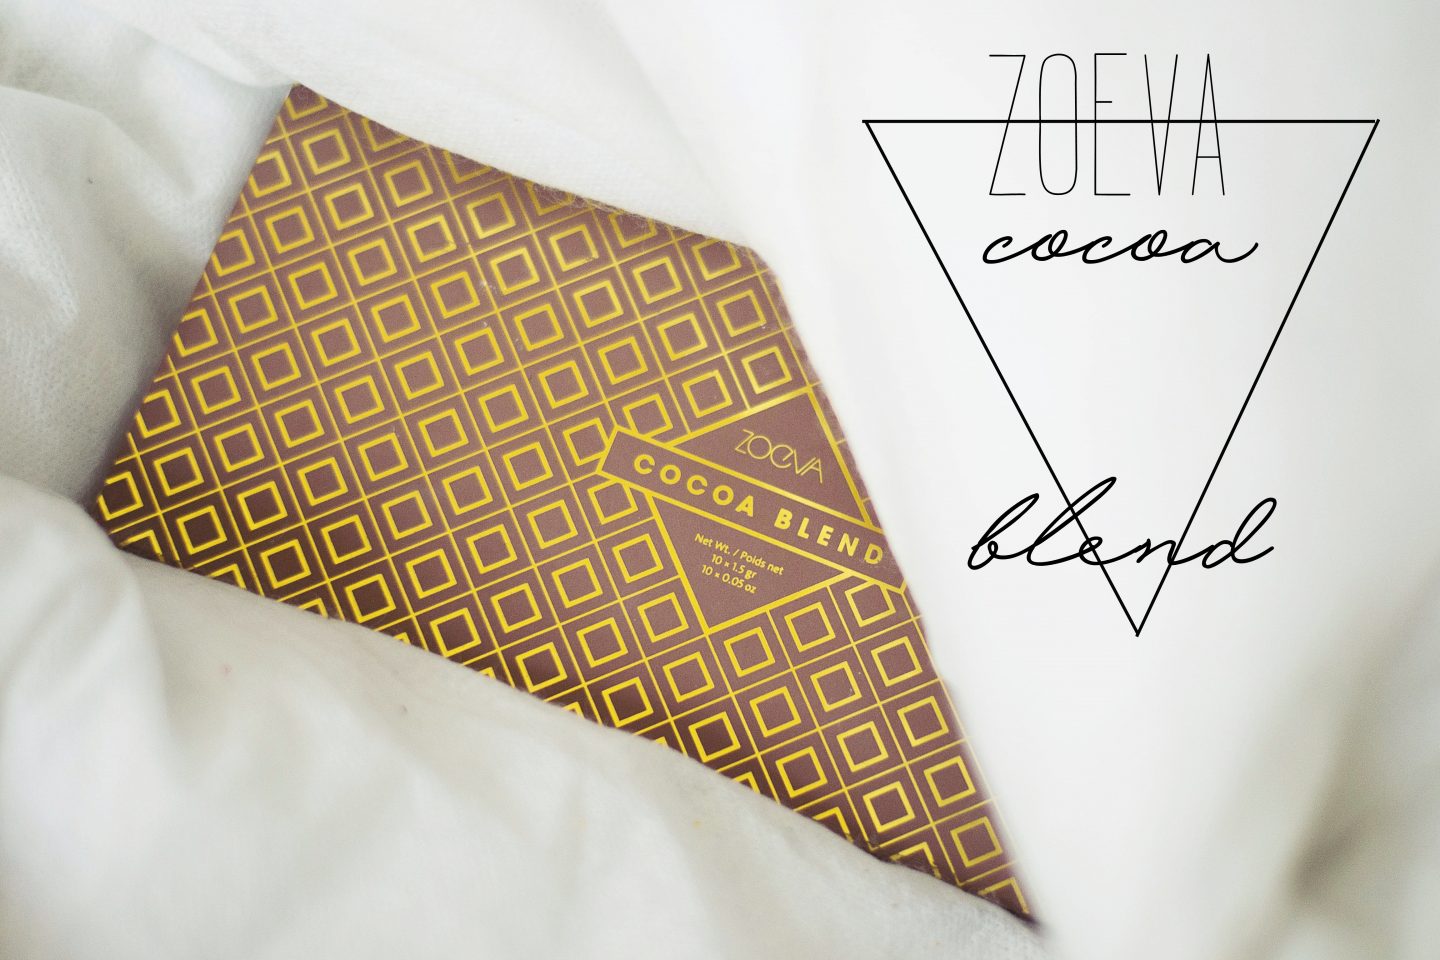 Zoeva cocoa blend | review